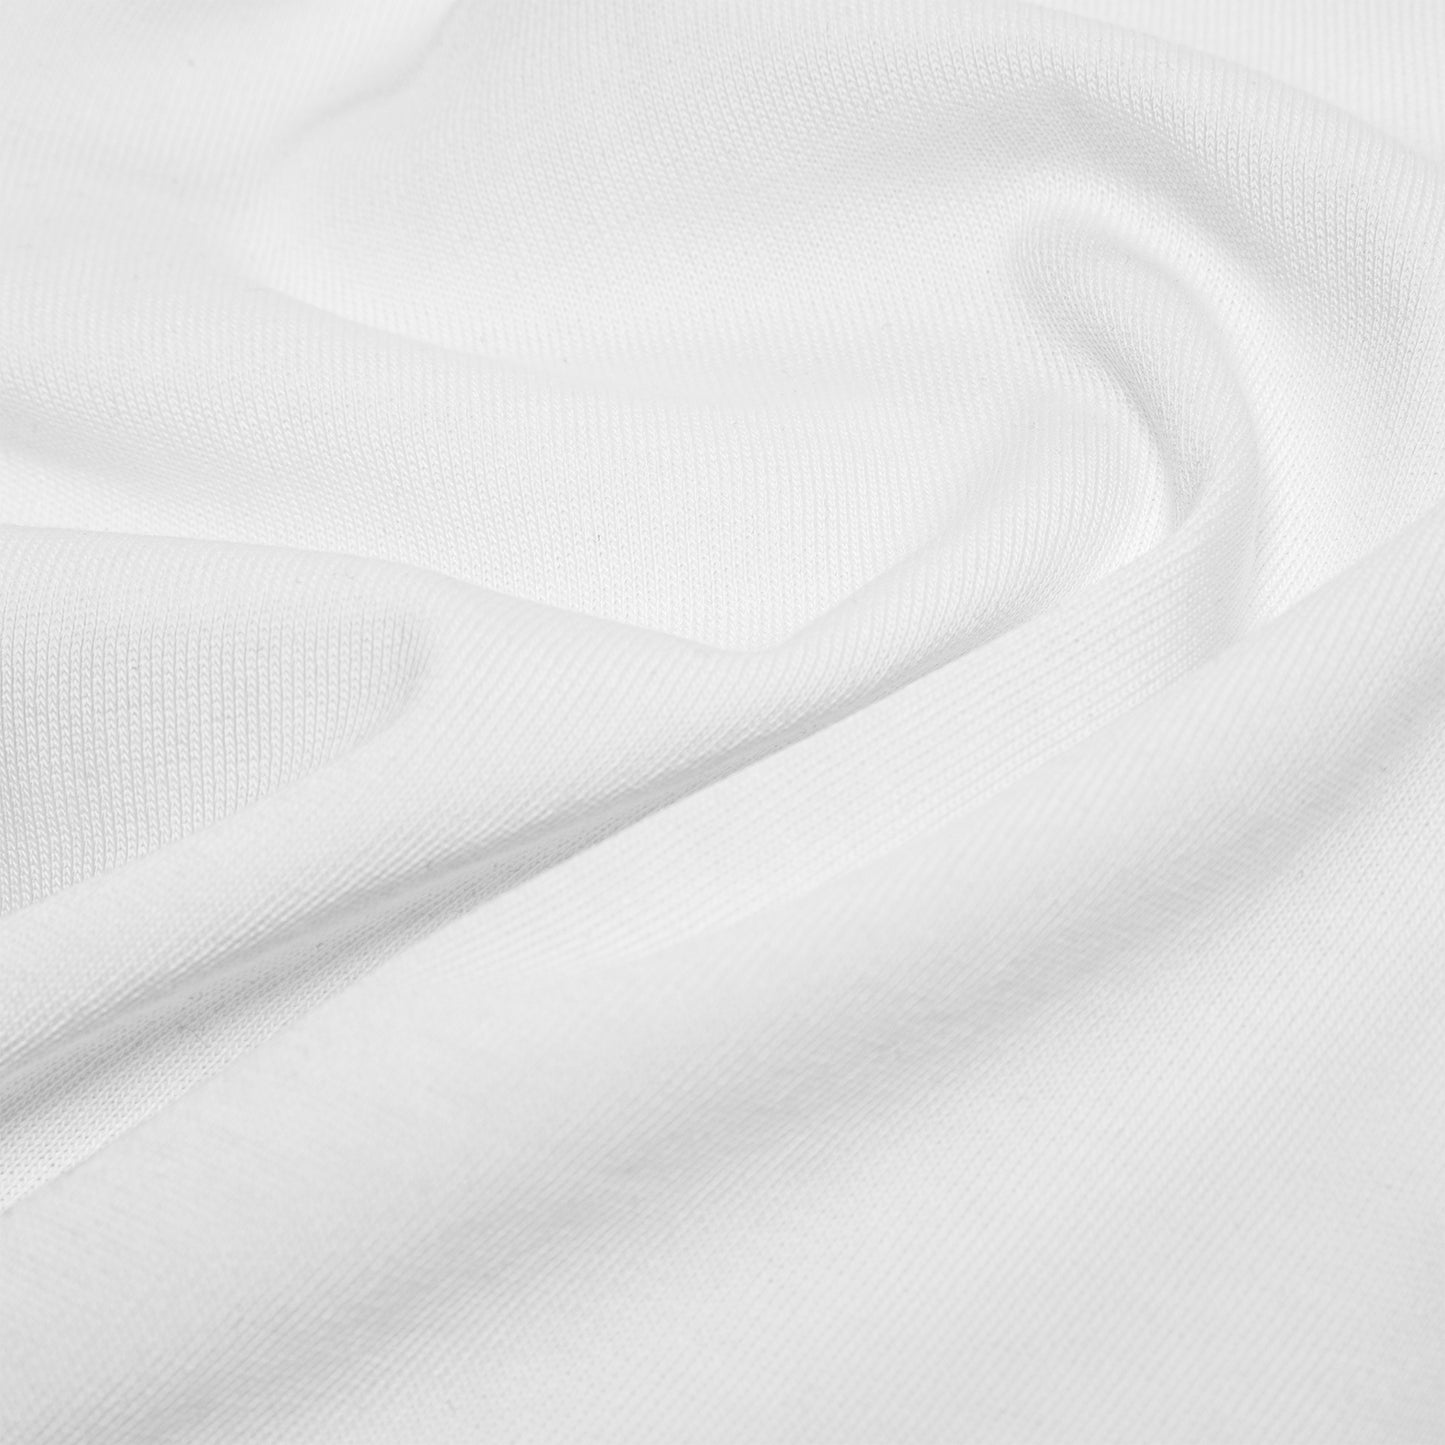 Everest Isles Long Sleeve Tee Shirt (White)